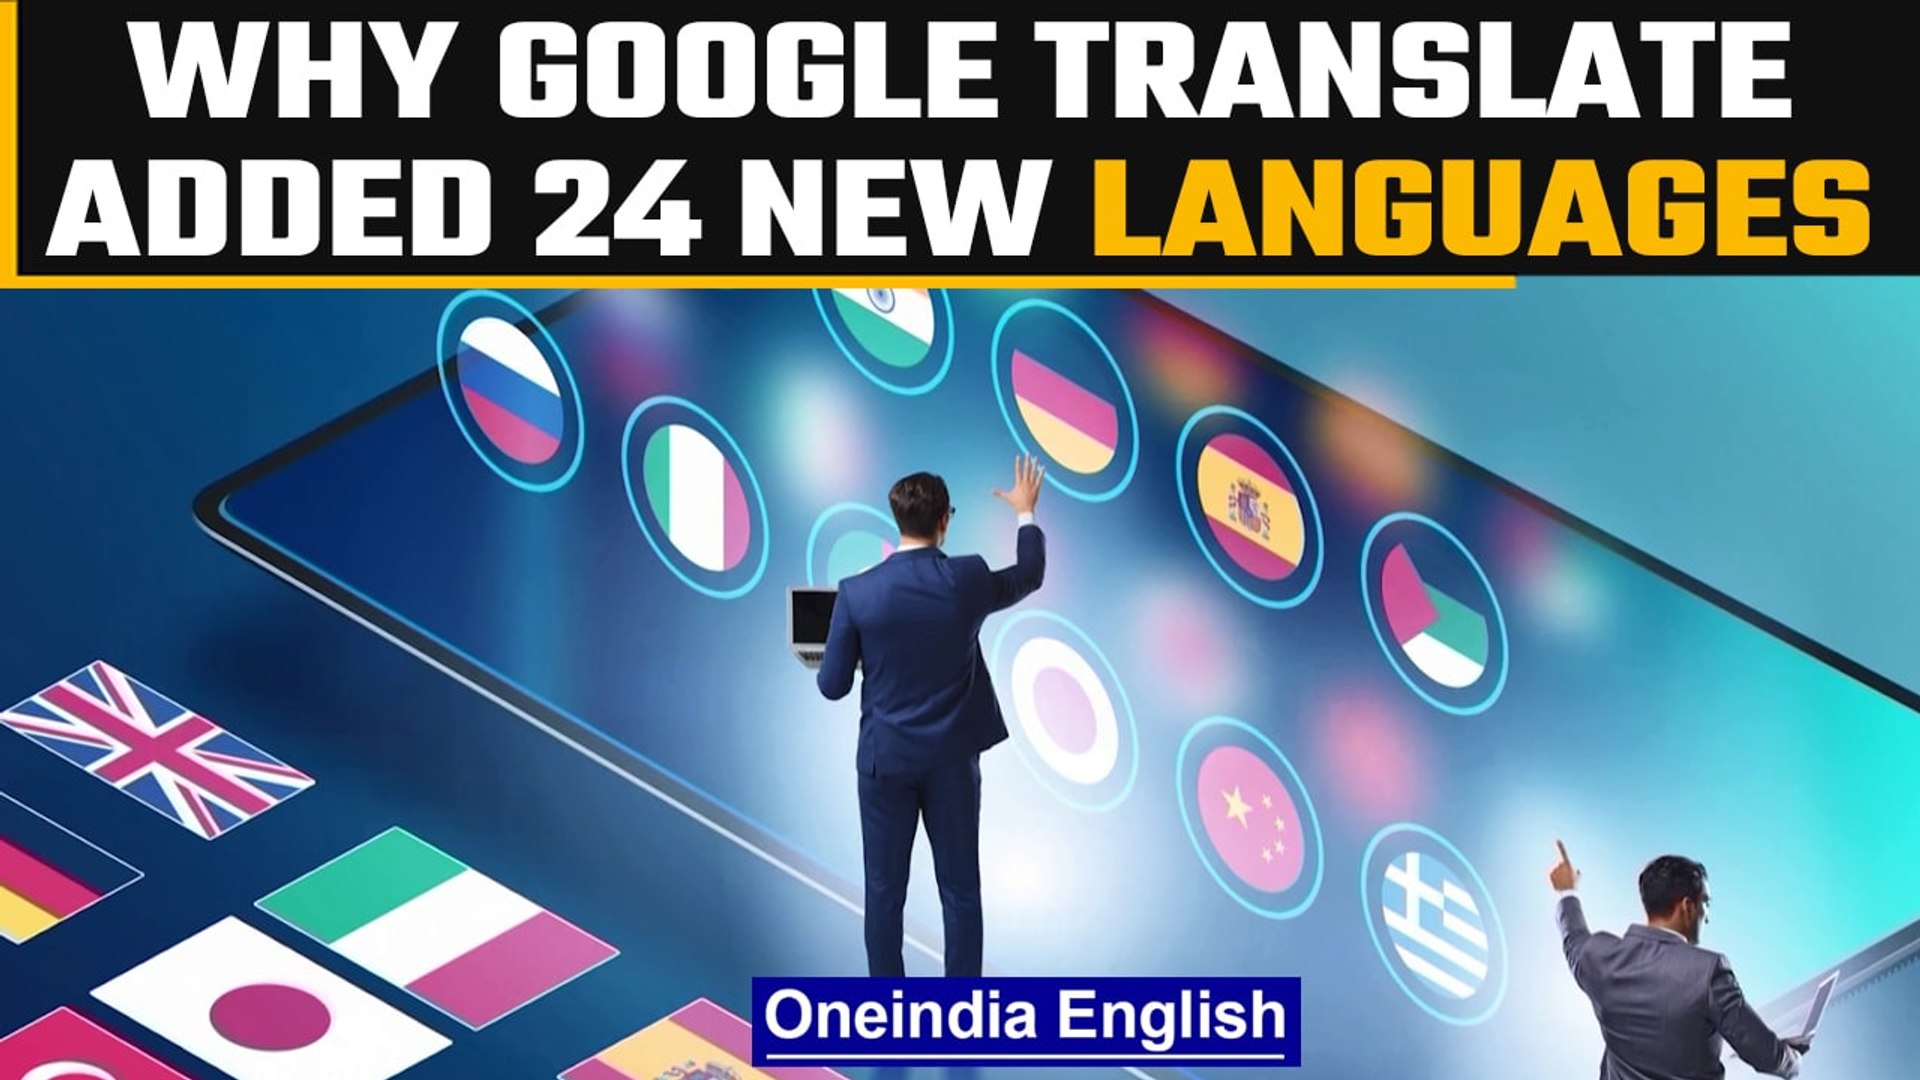 Google translate adds 24 new languages including Bhojpuri | Oneindia News *News